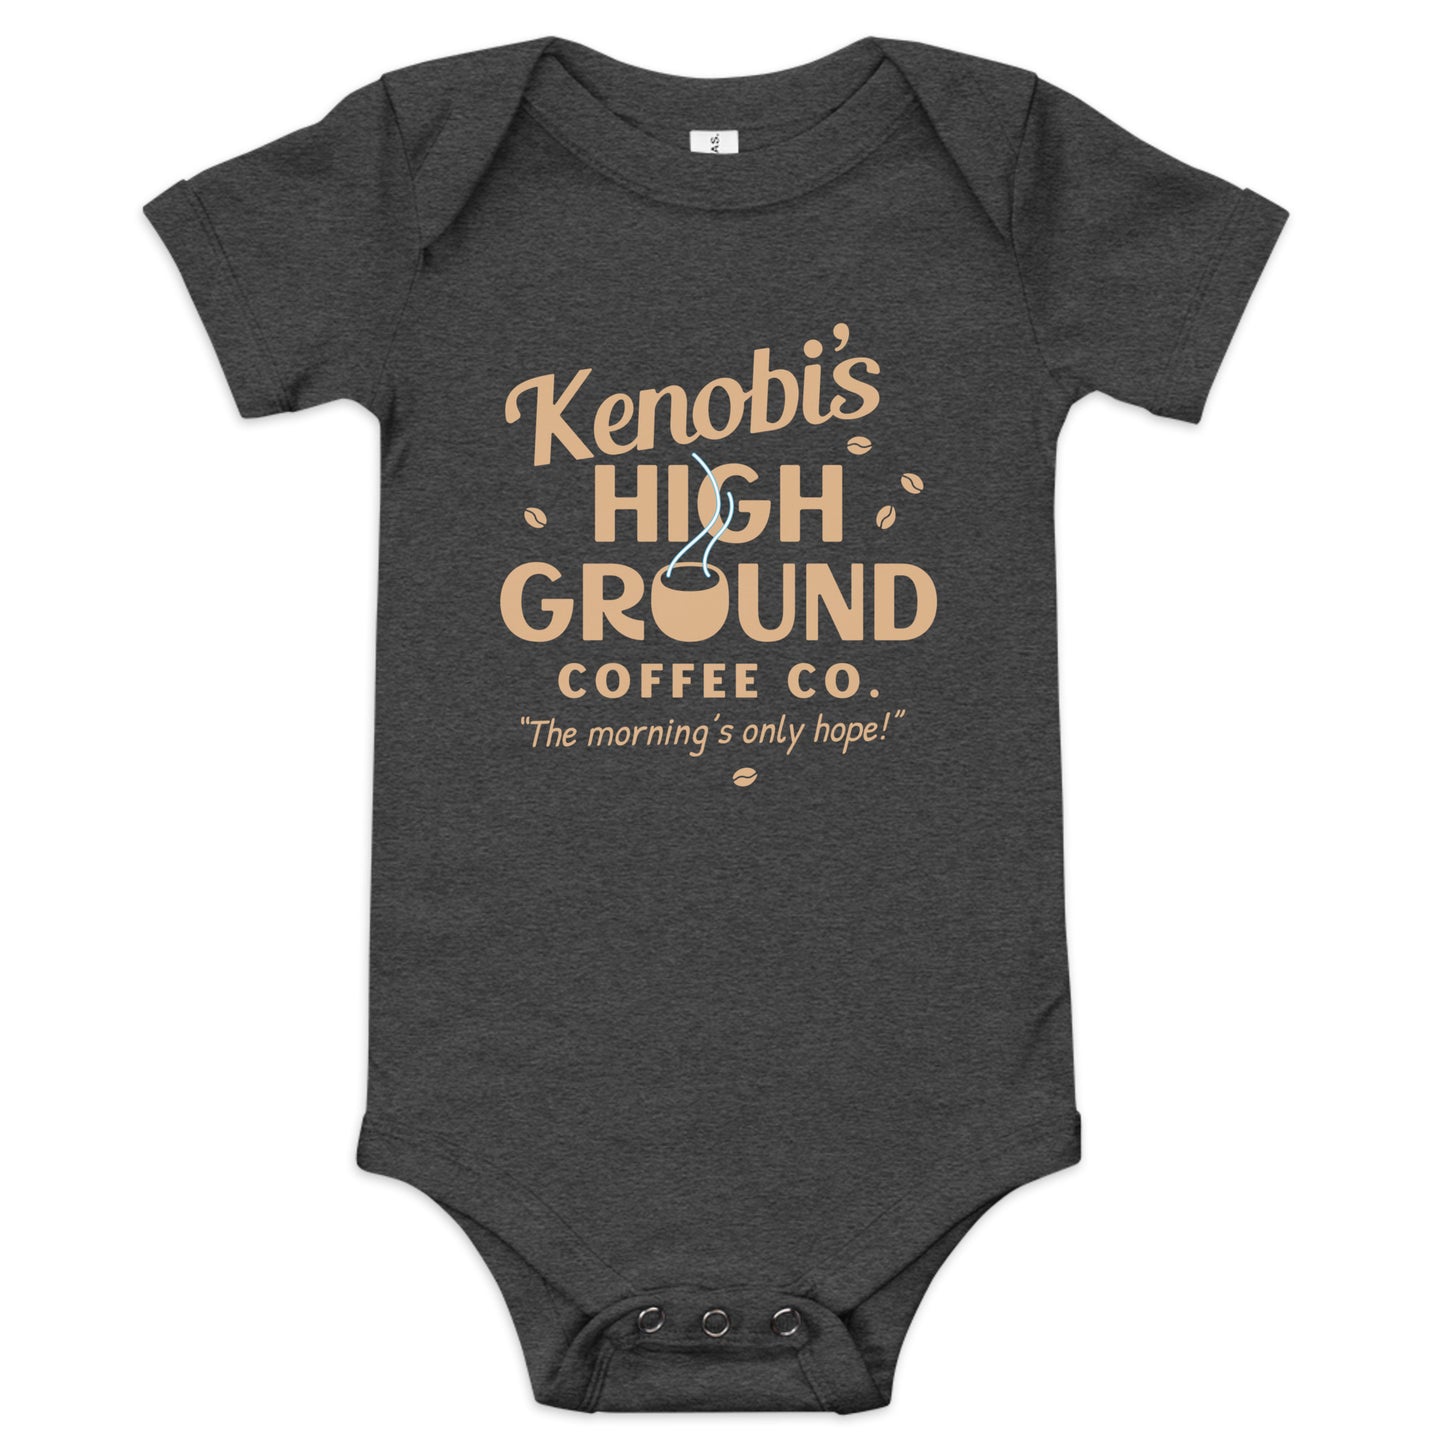 Kenobi's High Ground Coffee Co Kid's Onesie